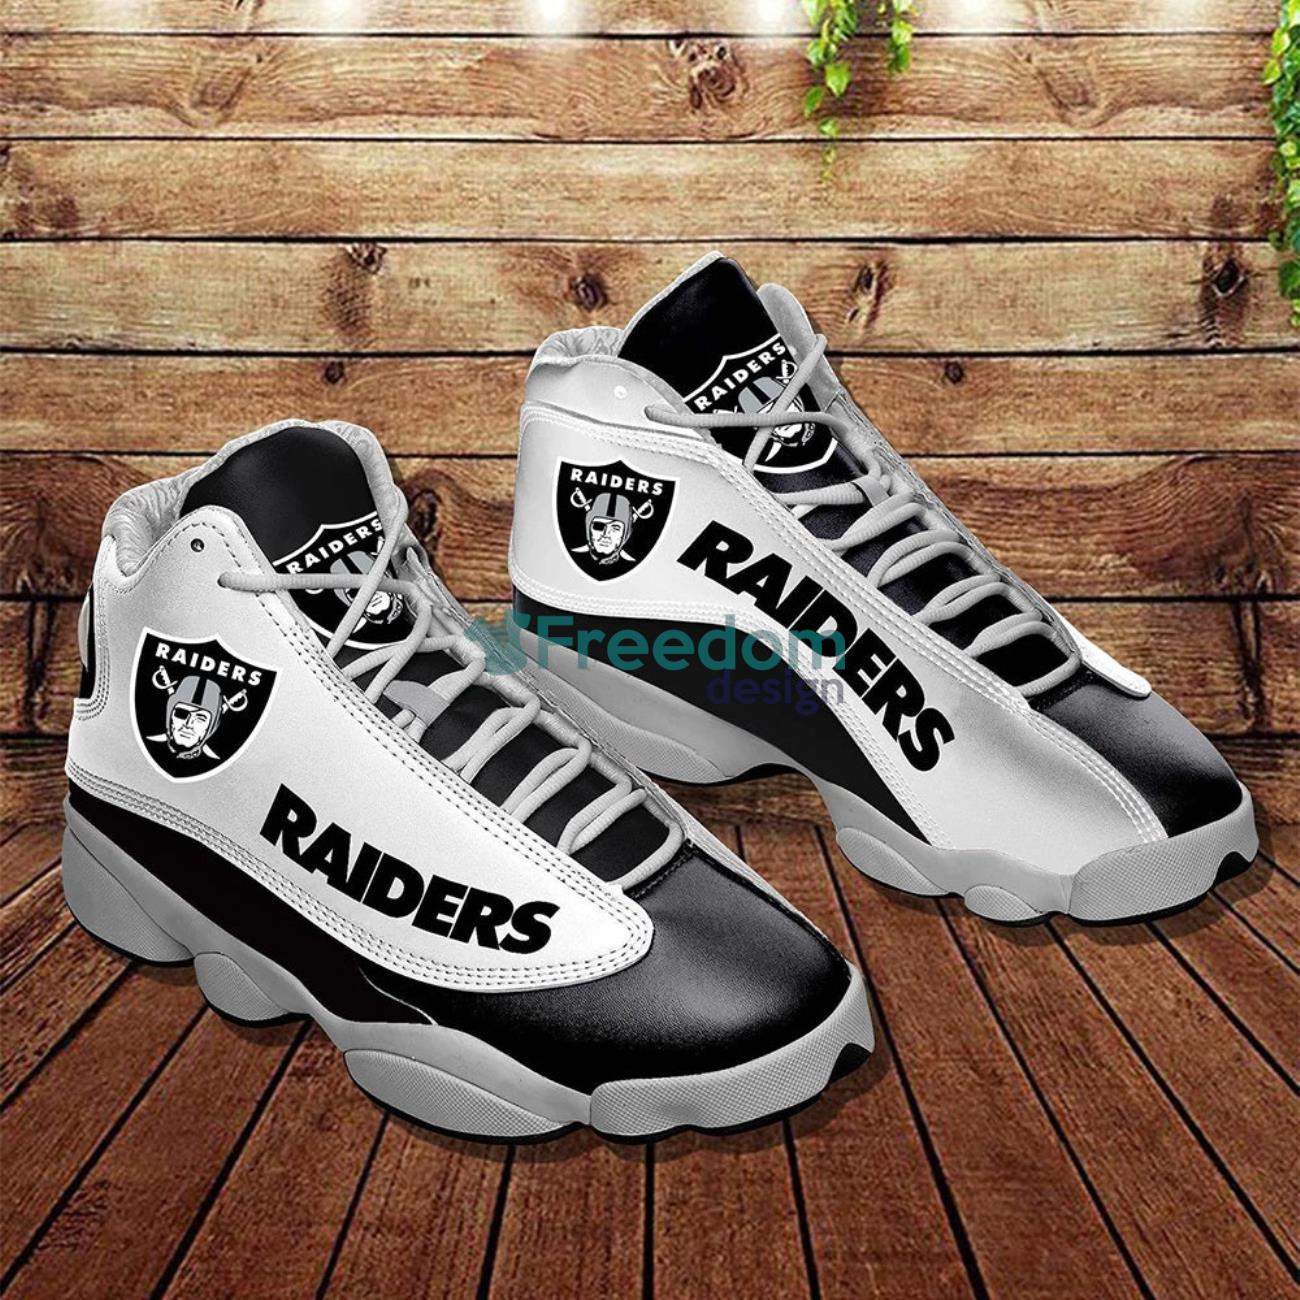 Las Vegas Raiders Team Air Jordan 13 Sneaker Shoes For Fans qAw